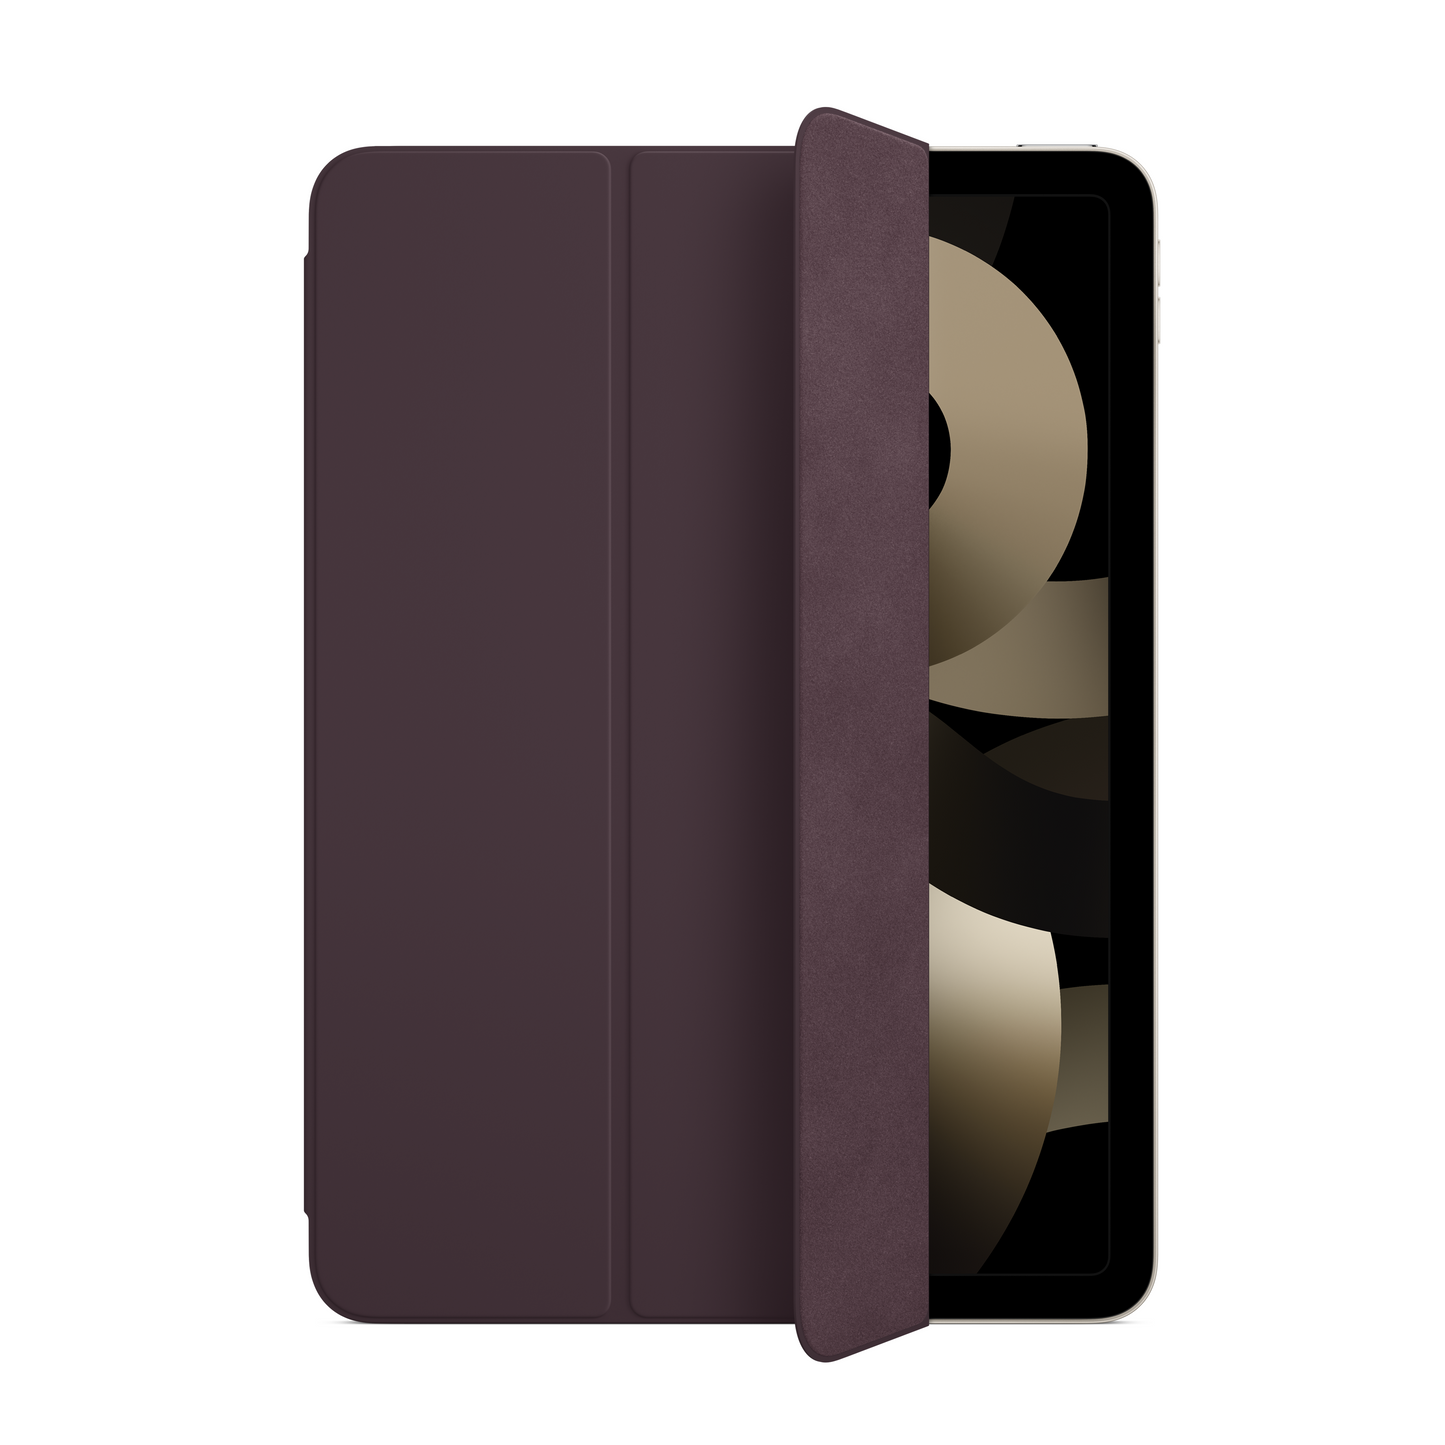 Smart Folio for iPad Air (5th generation) - Dark Cherry